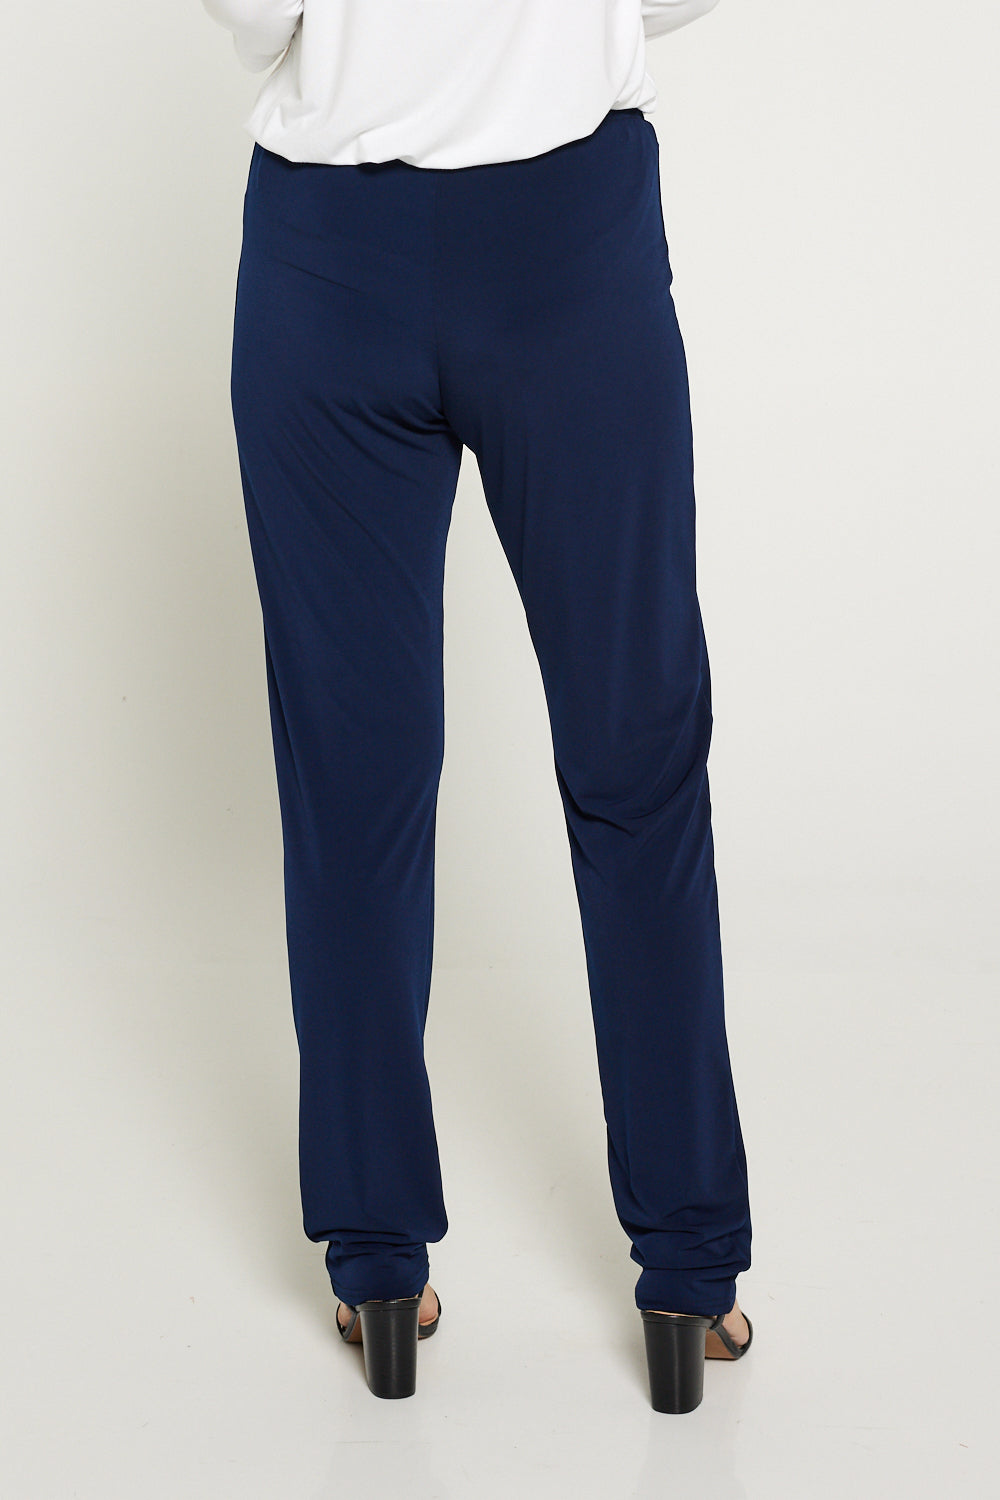 Gianna Tall Pants - Navy, Mature Women's Clothing